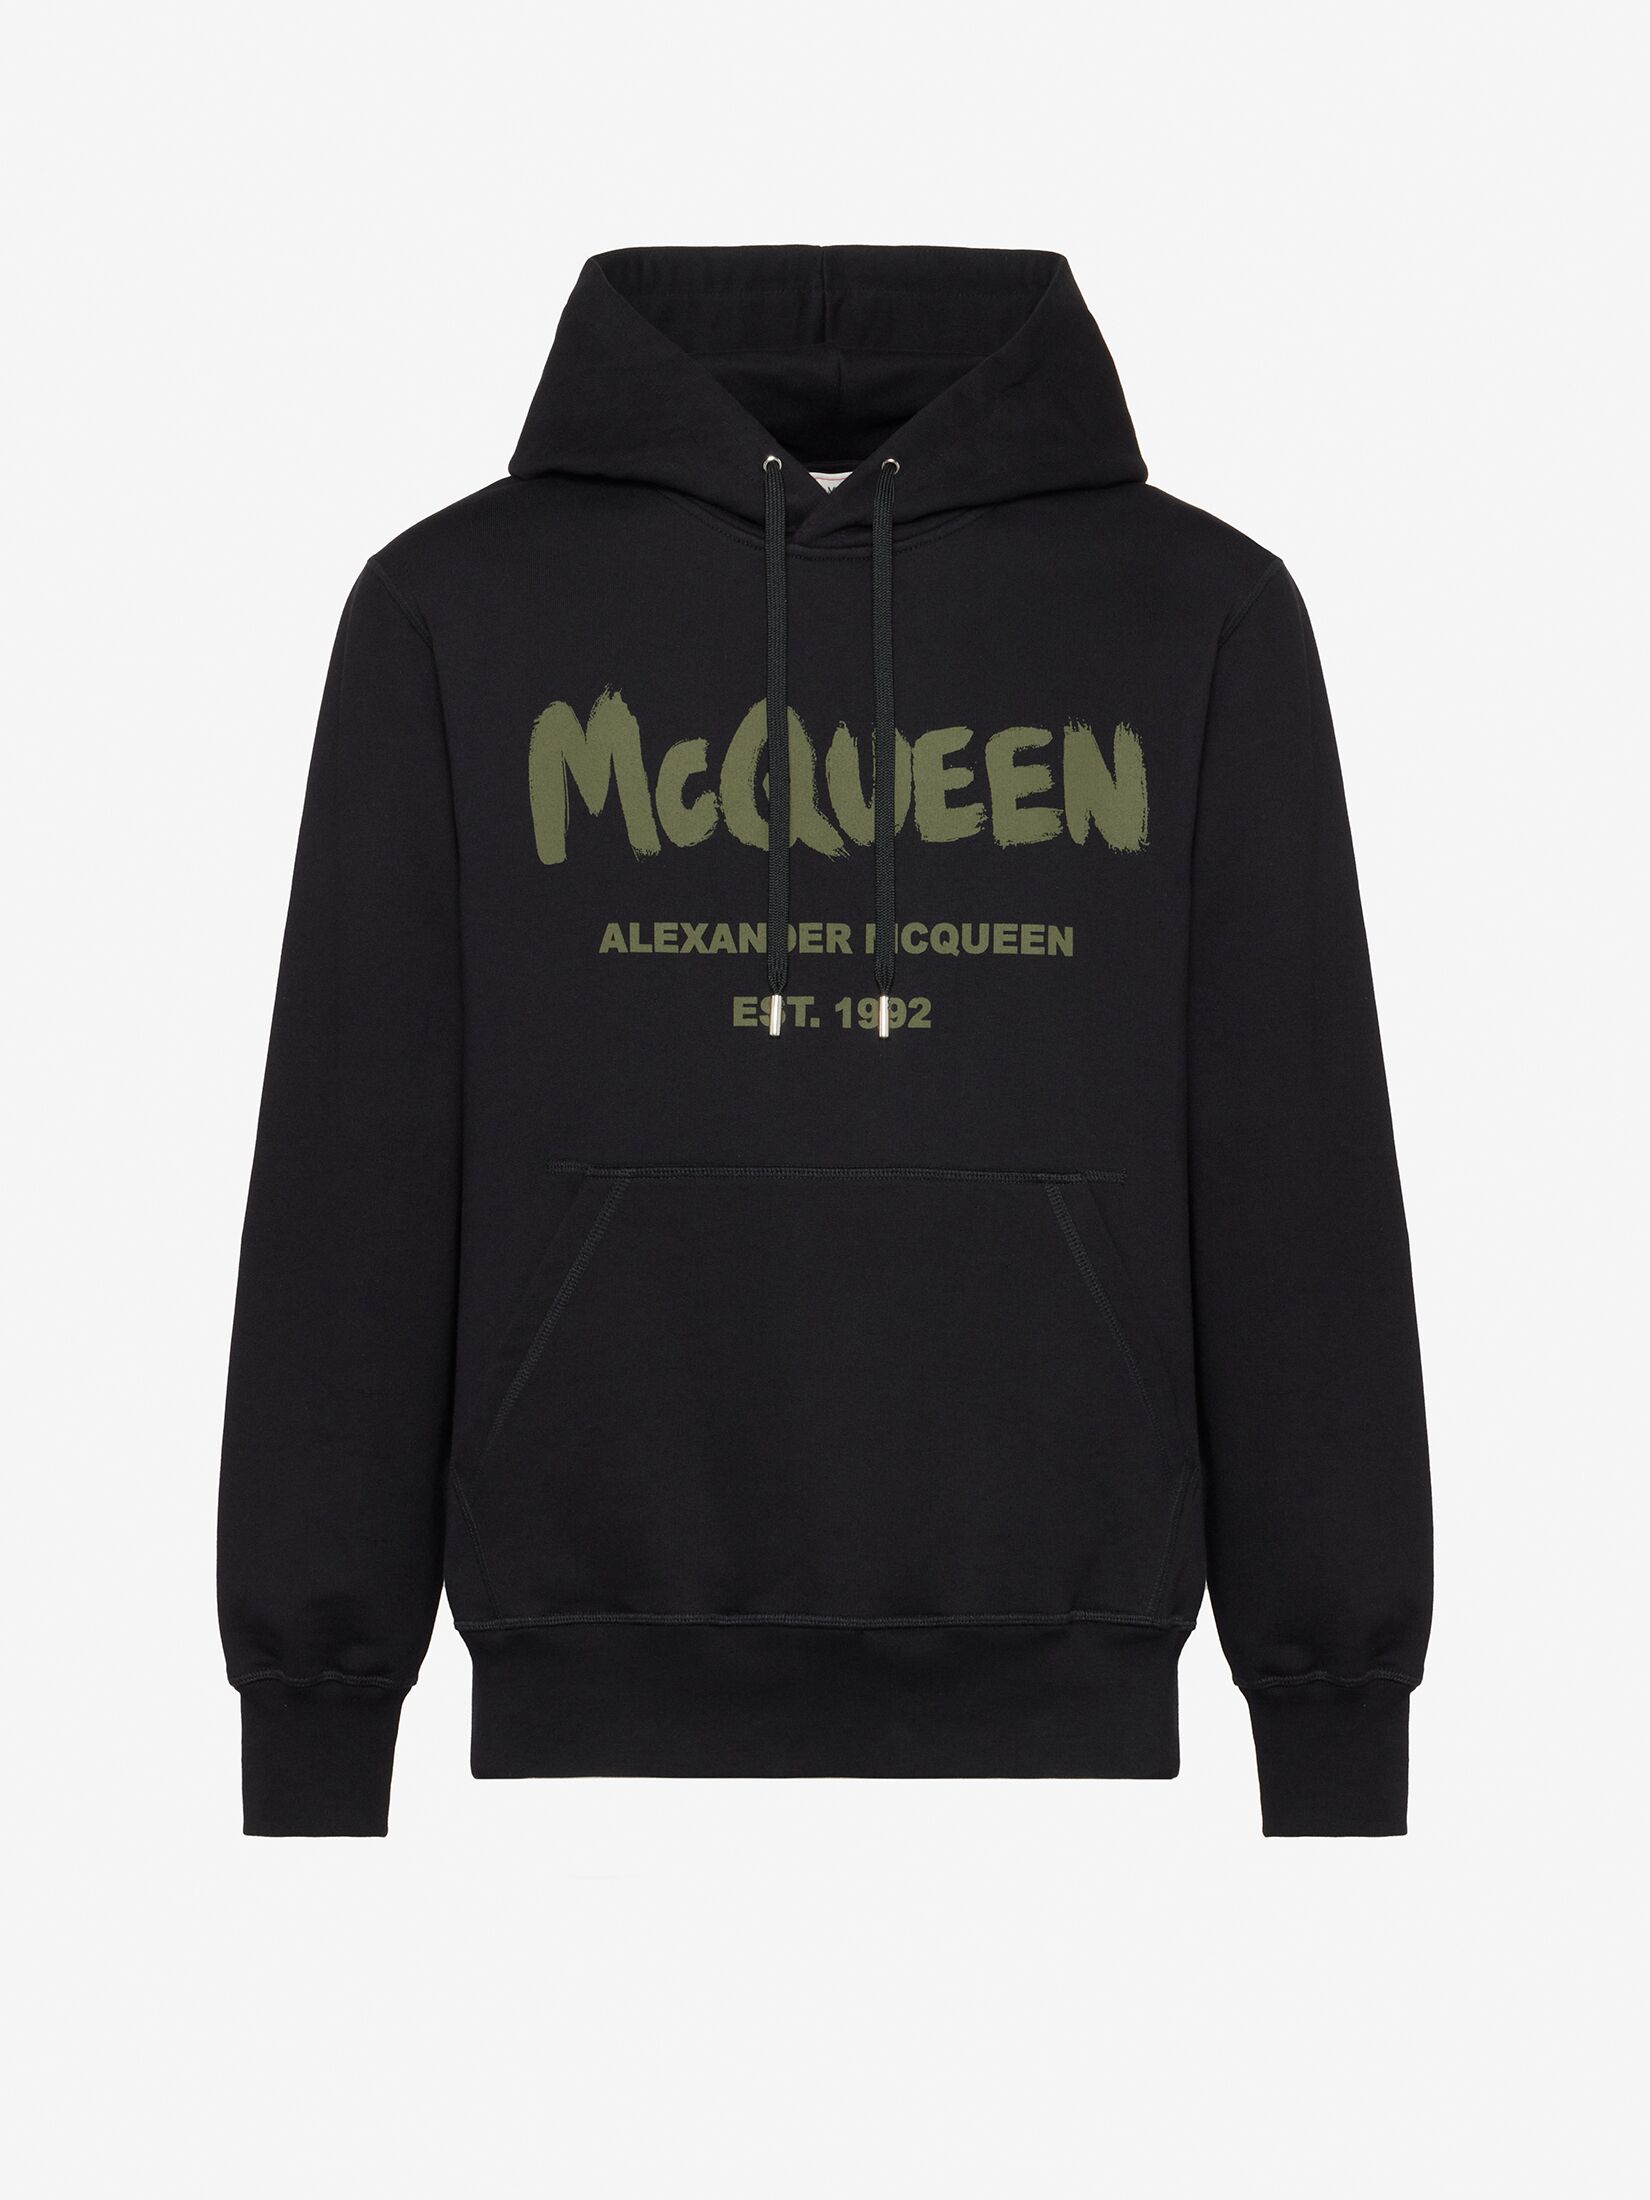 Kapuzensweatshirt mit McQueen-Graffiti-Motiv